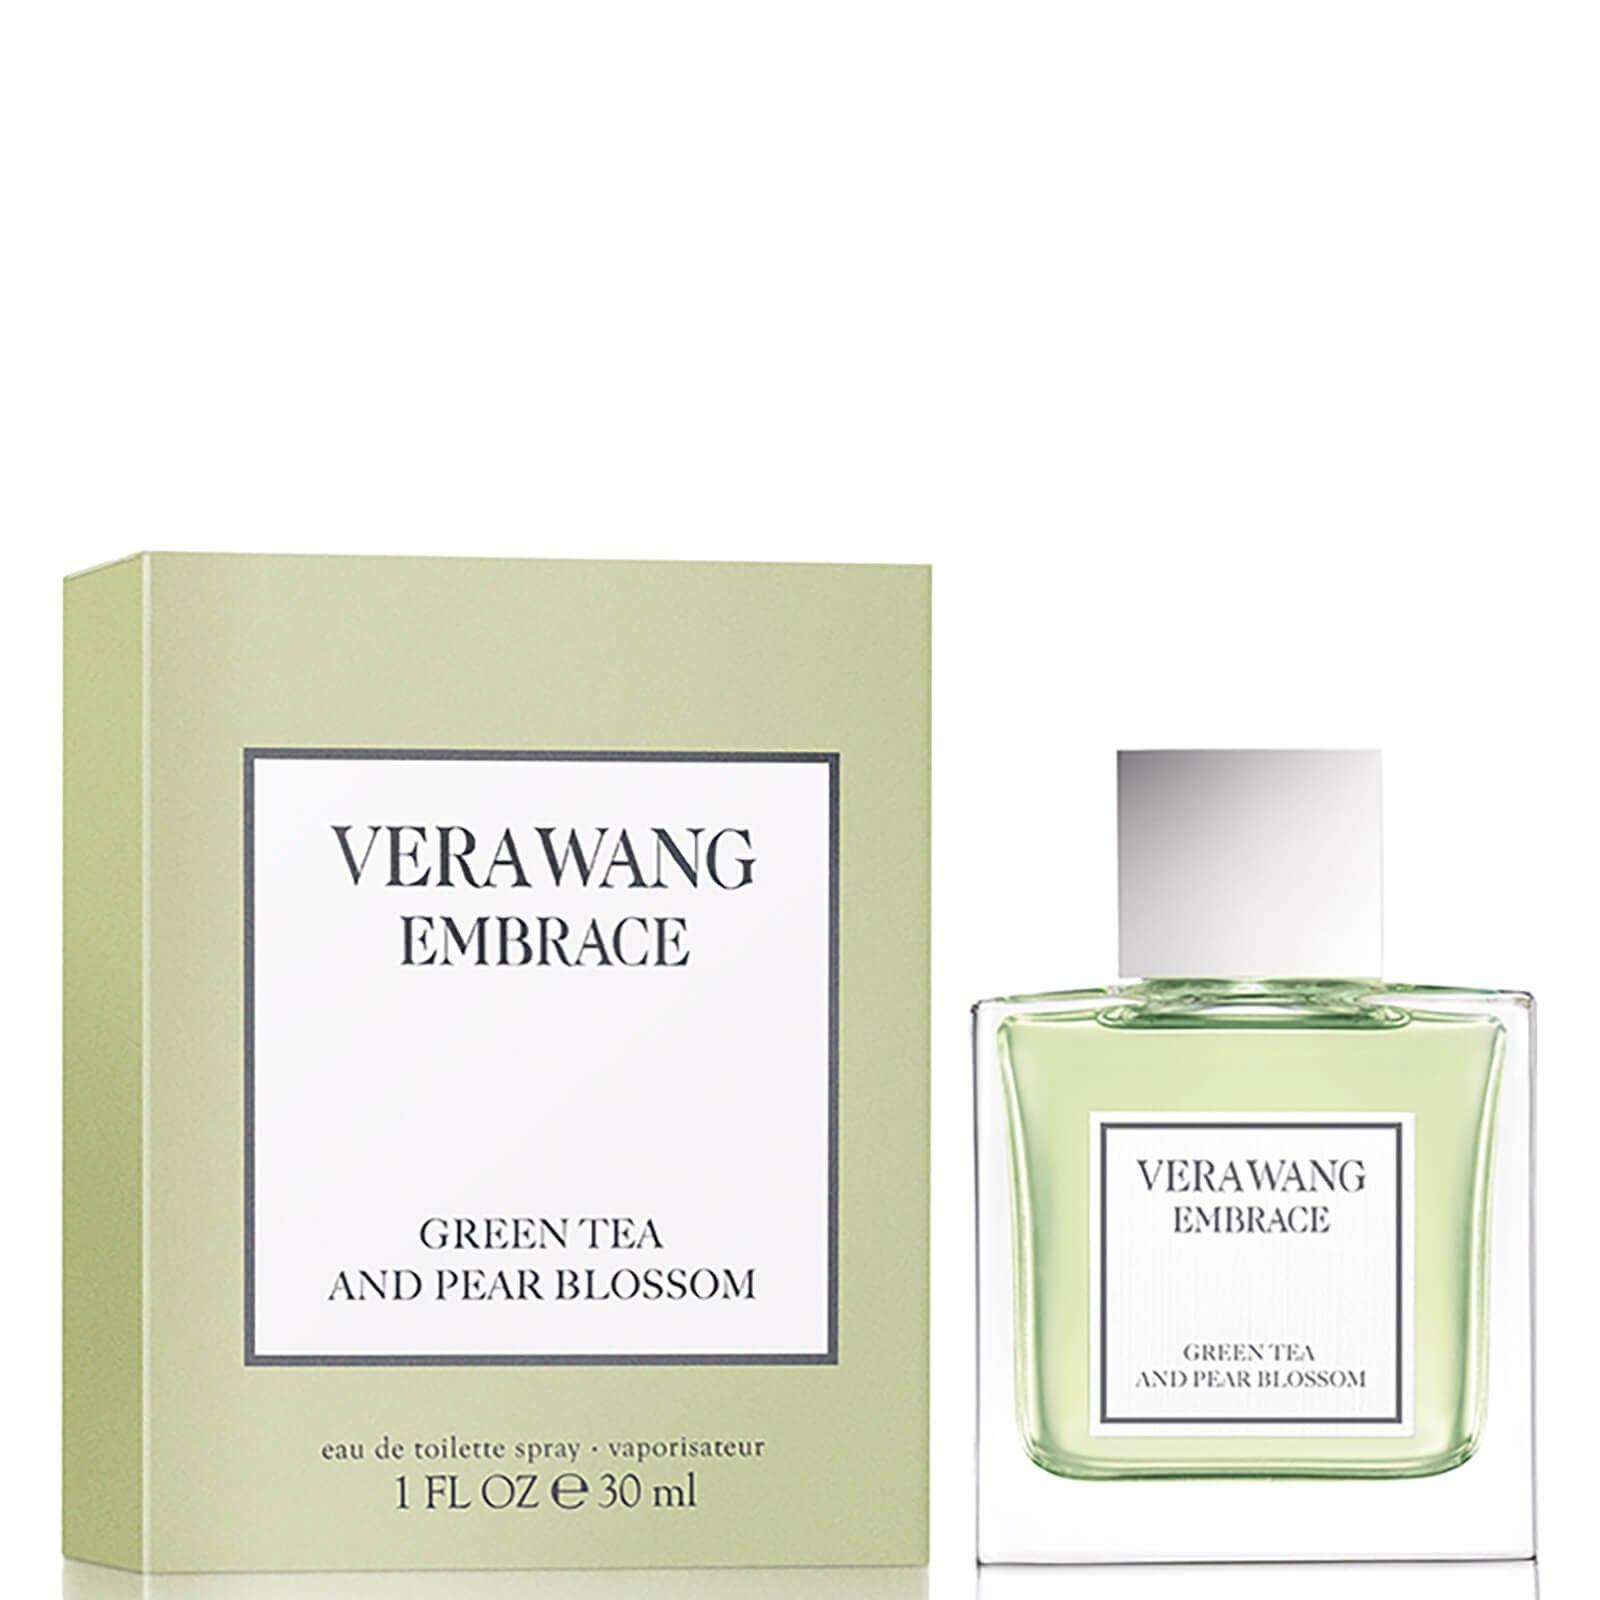 vera wang perfume embrace green tea